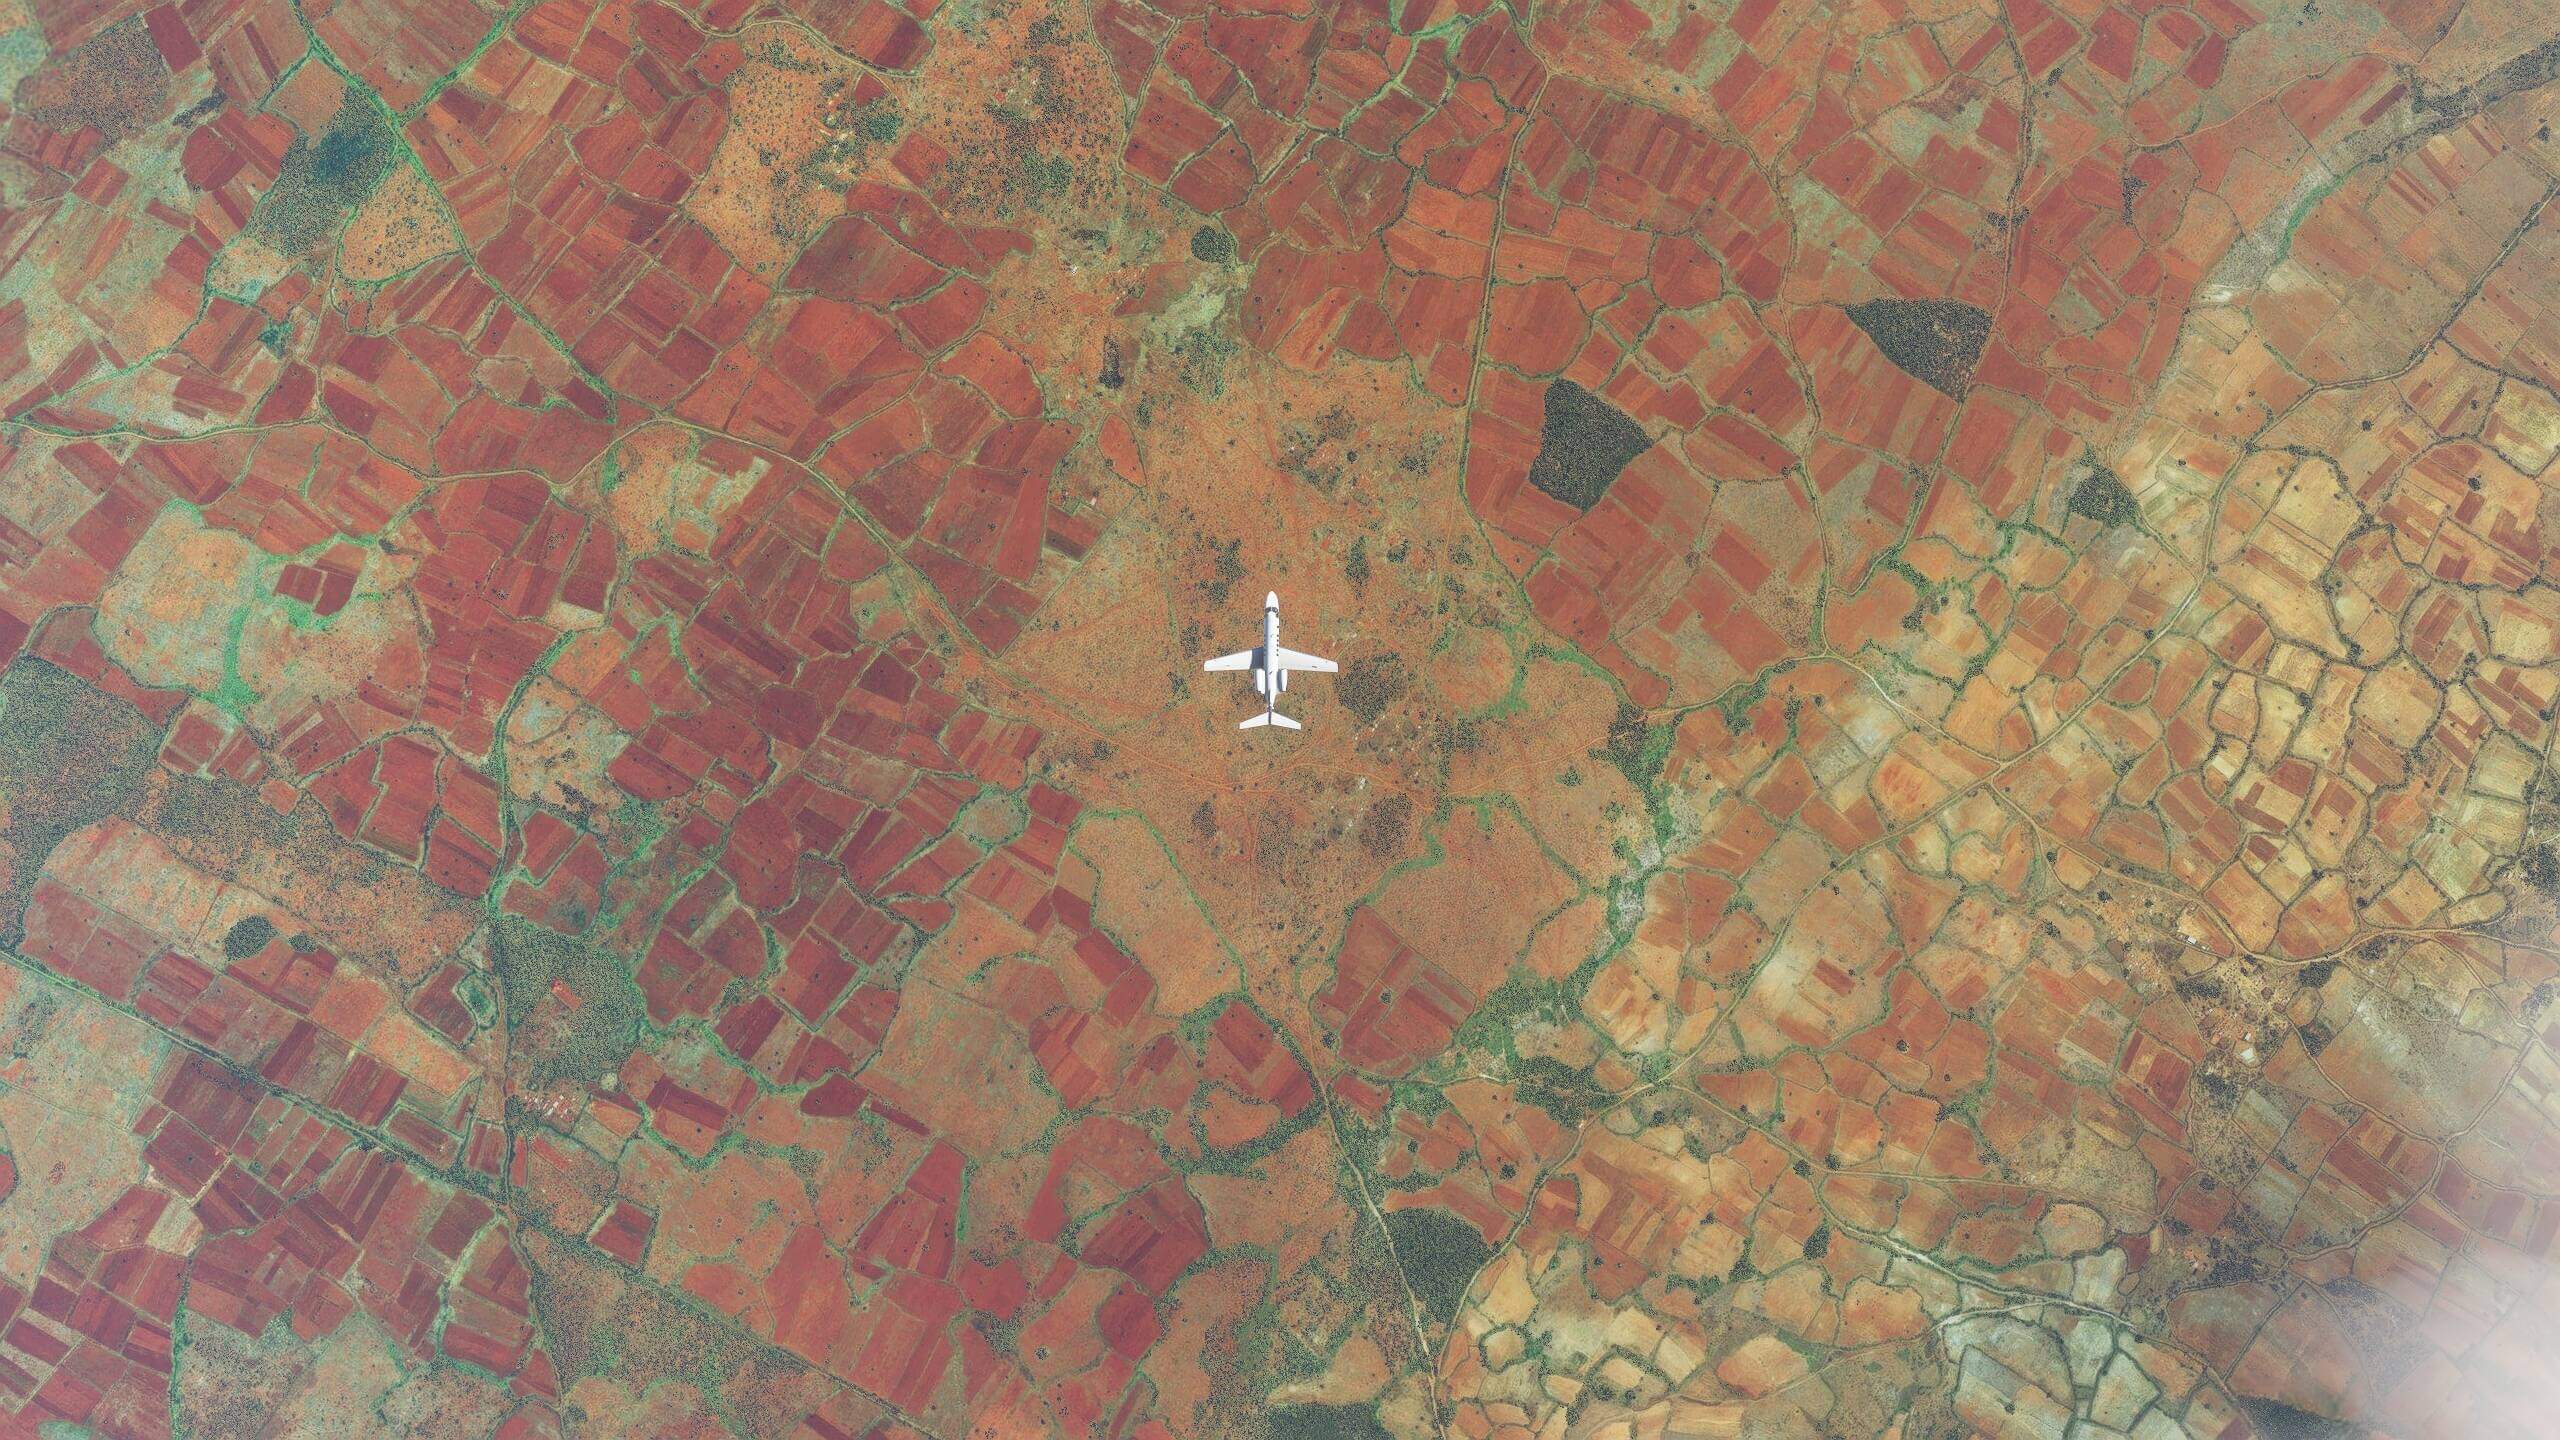 Plane flying over Madagascar